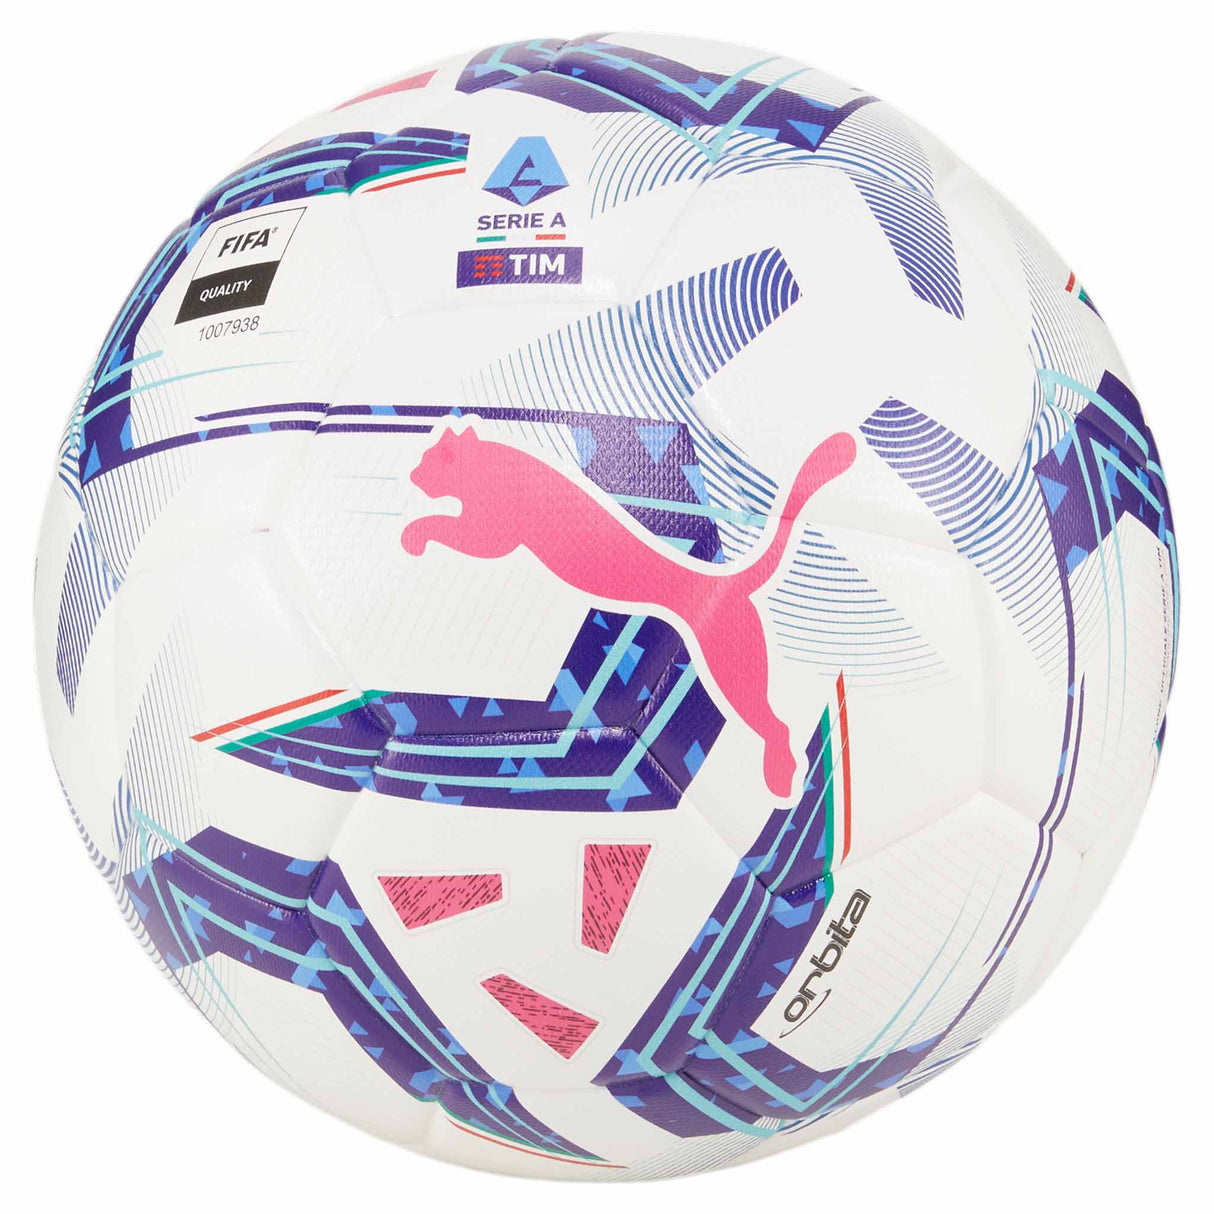 Puma Orbita Serie A FIFA Quality soccer match ball